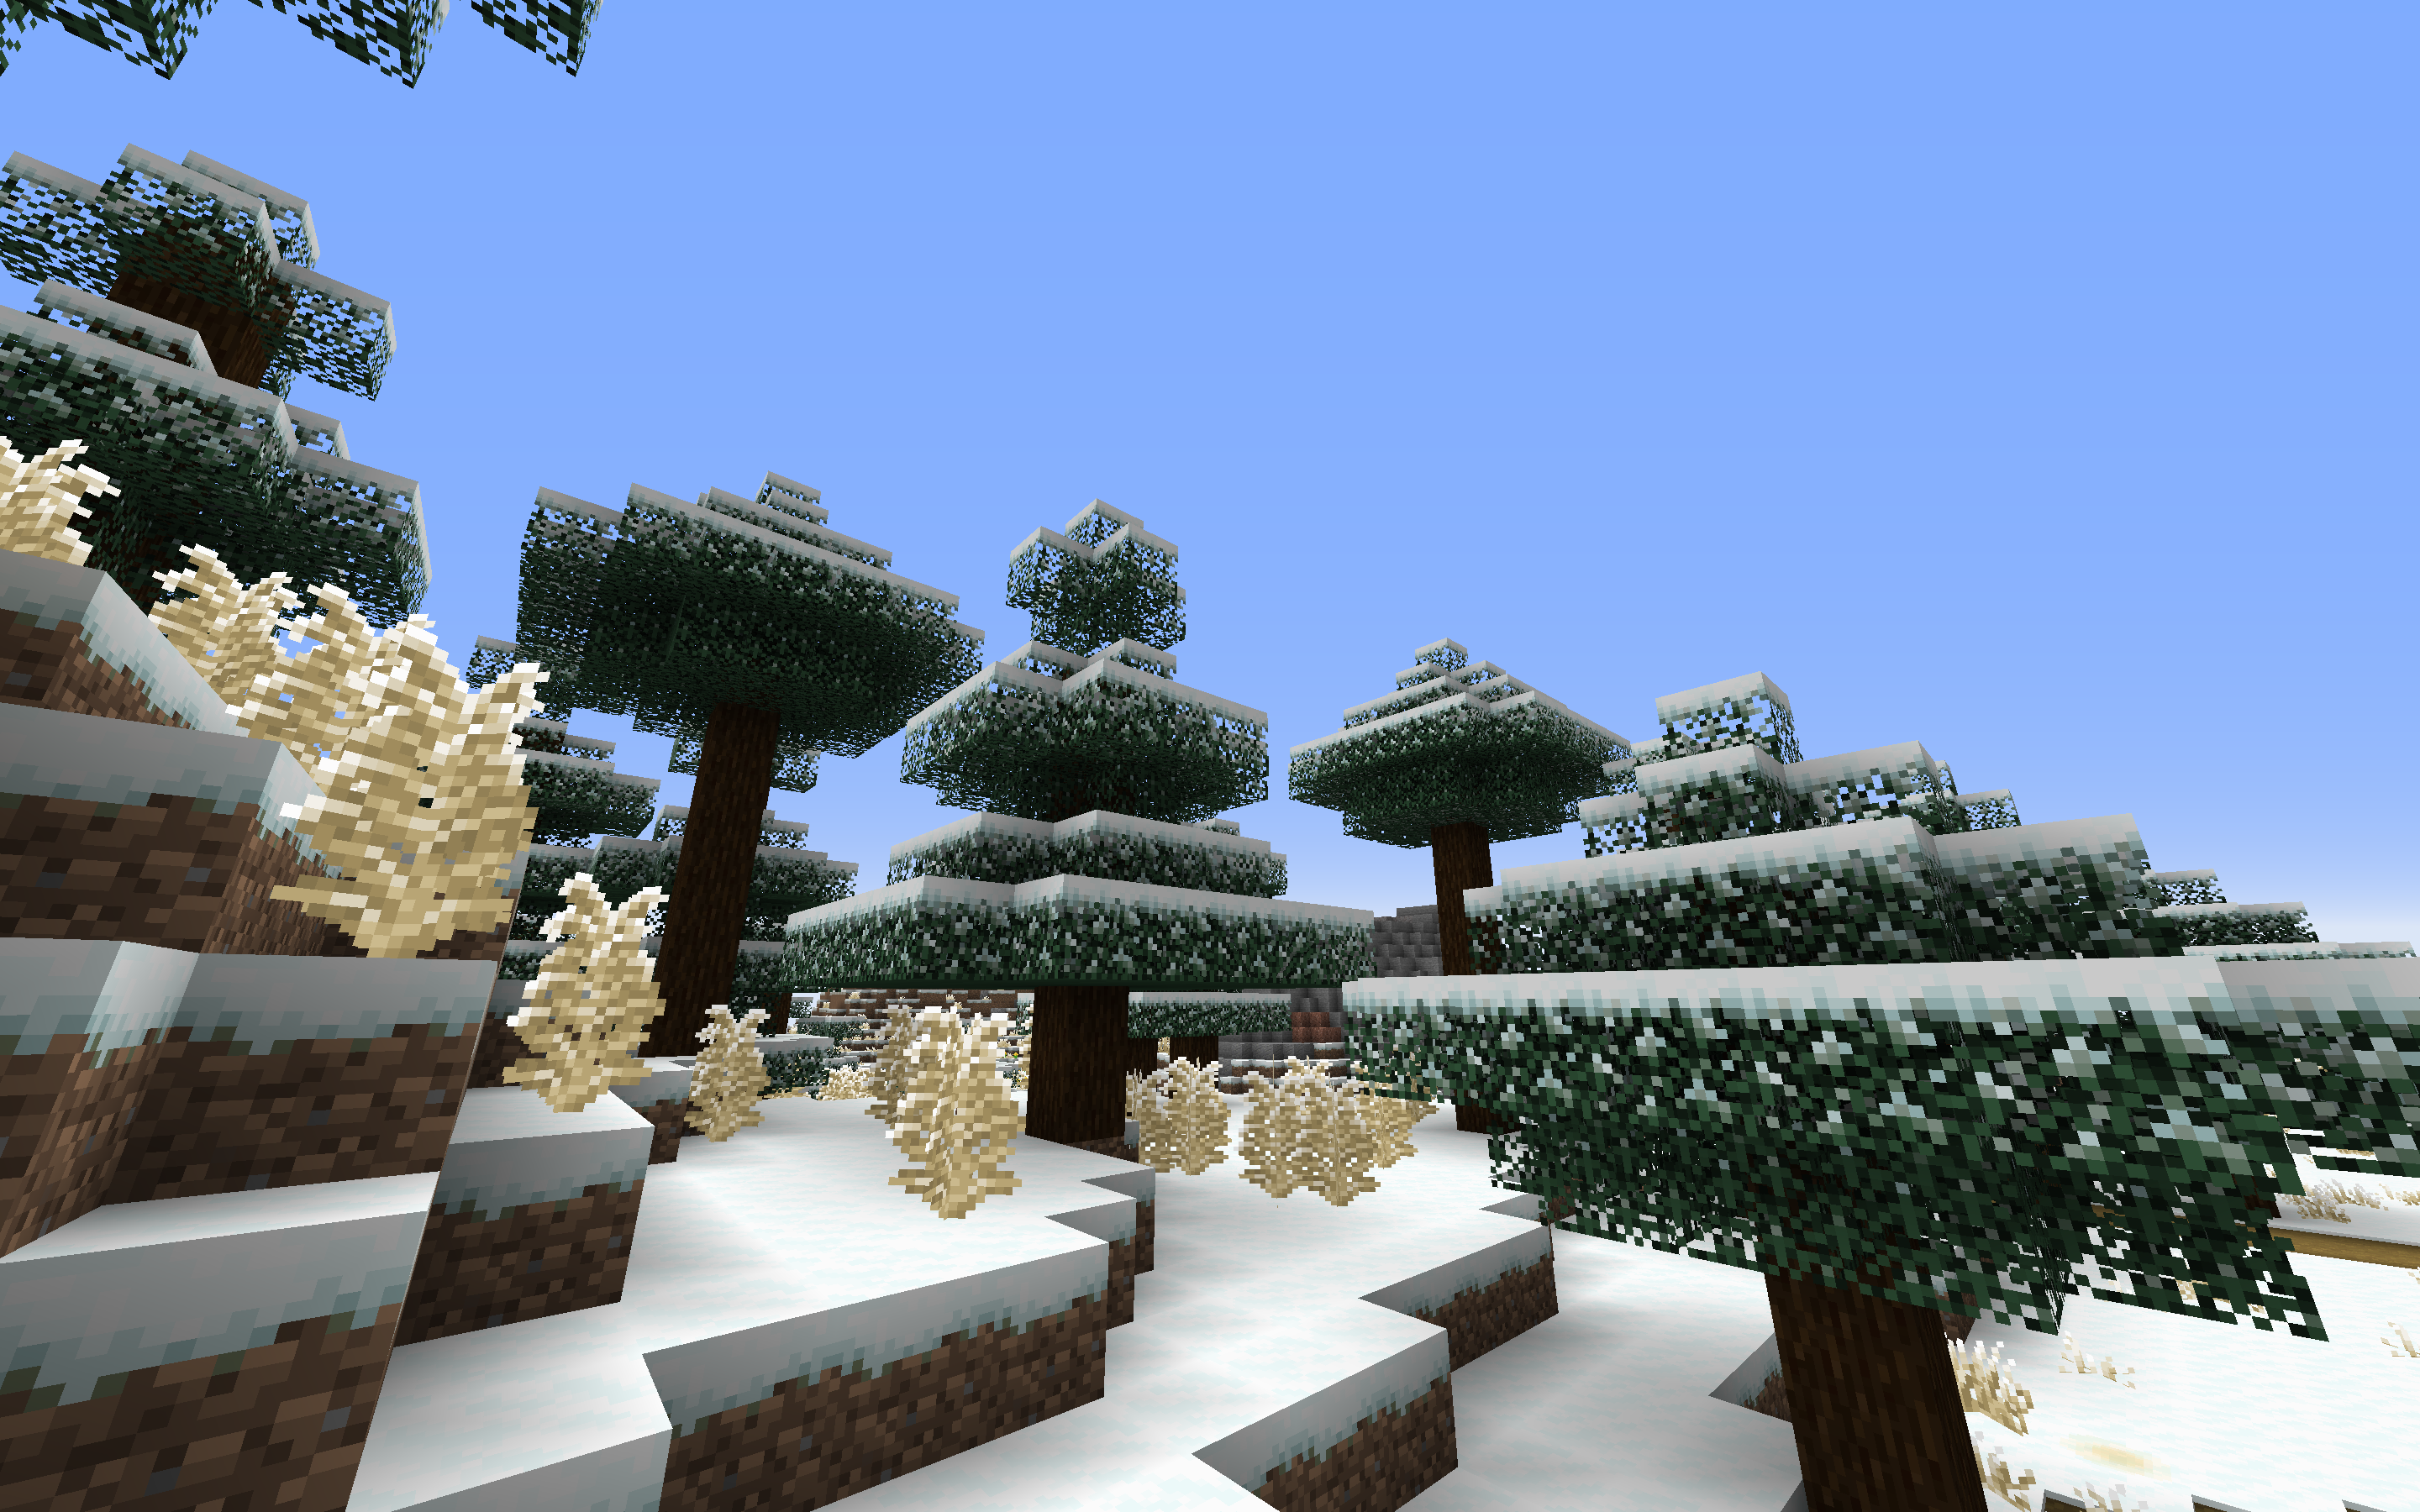 Default-Style Winter screenshot 3